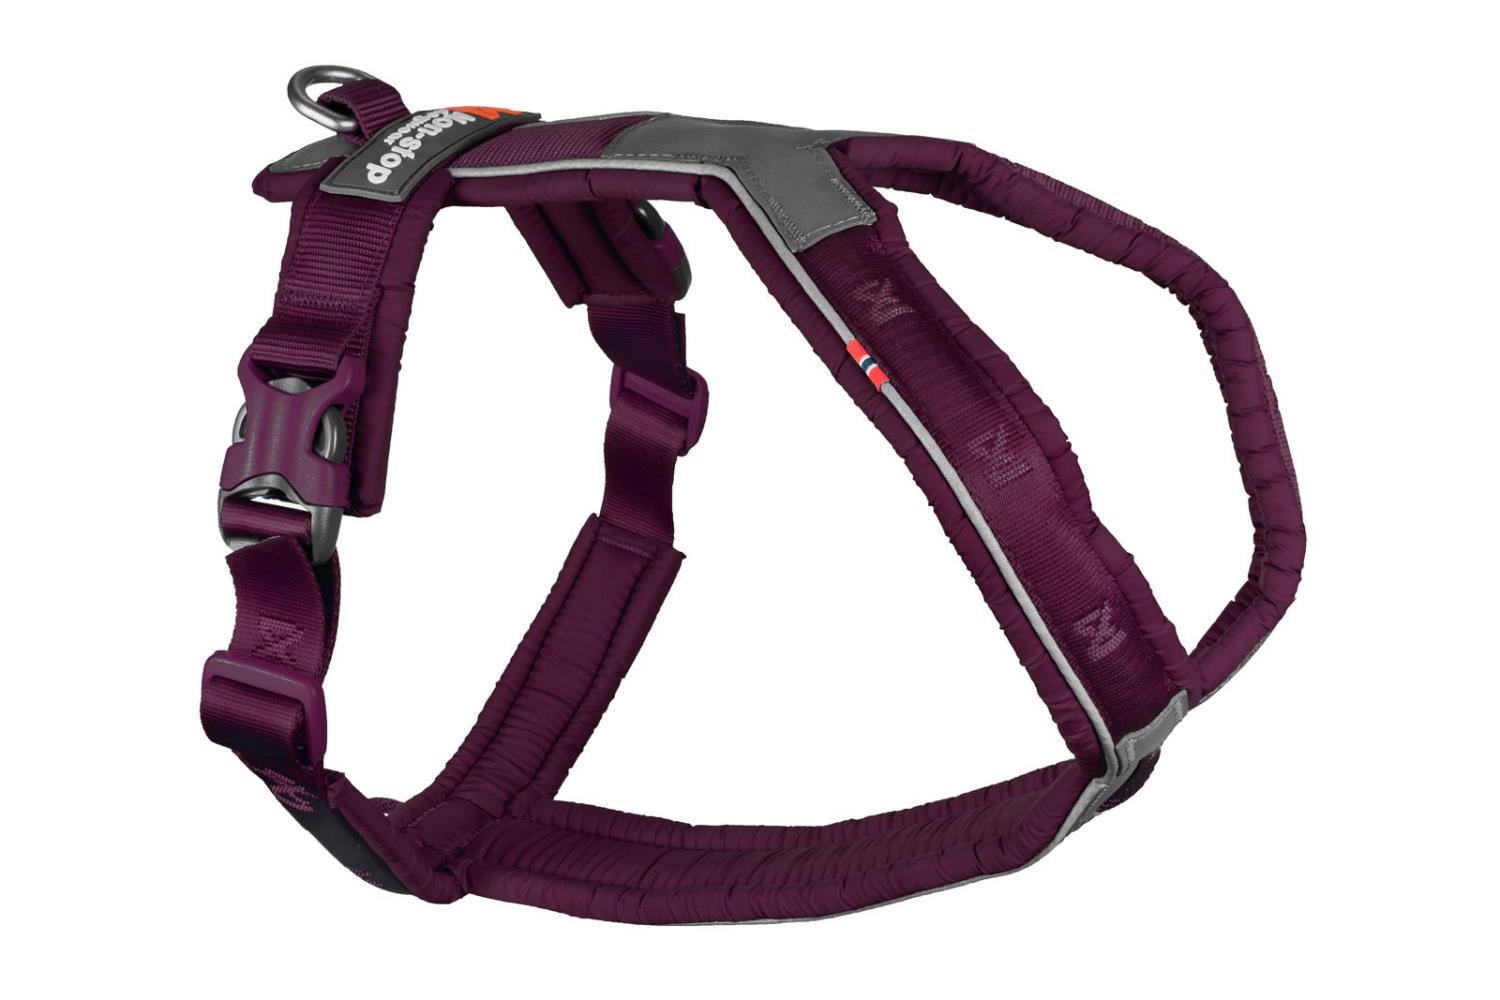 Line Harness 5.0, purple, 6